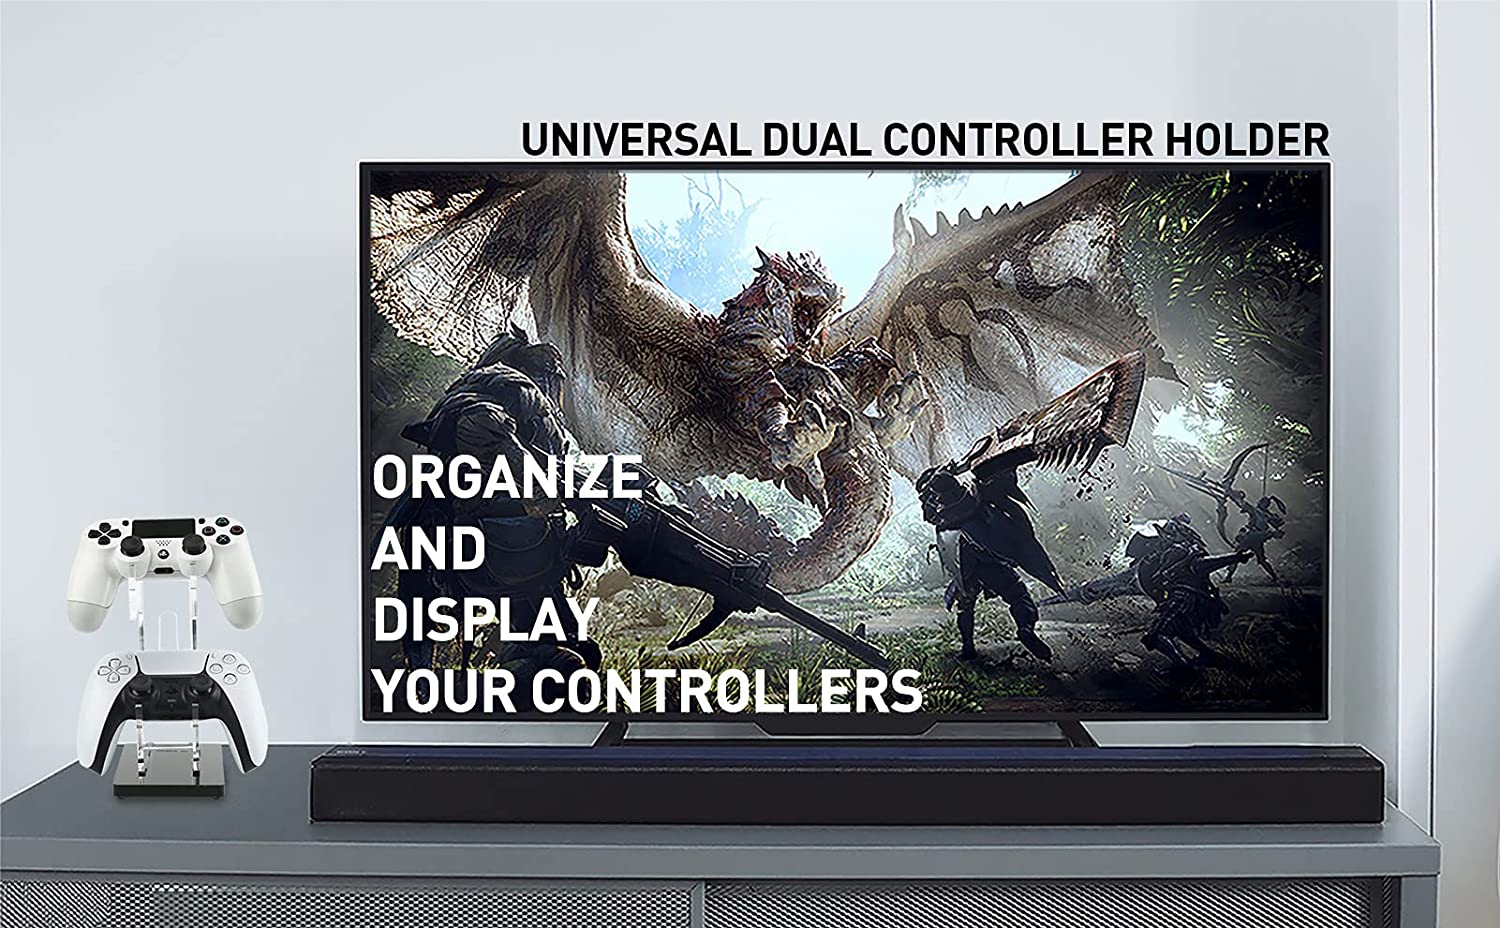 Universal Dual Controller Holder